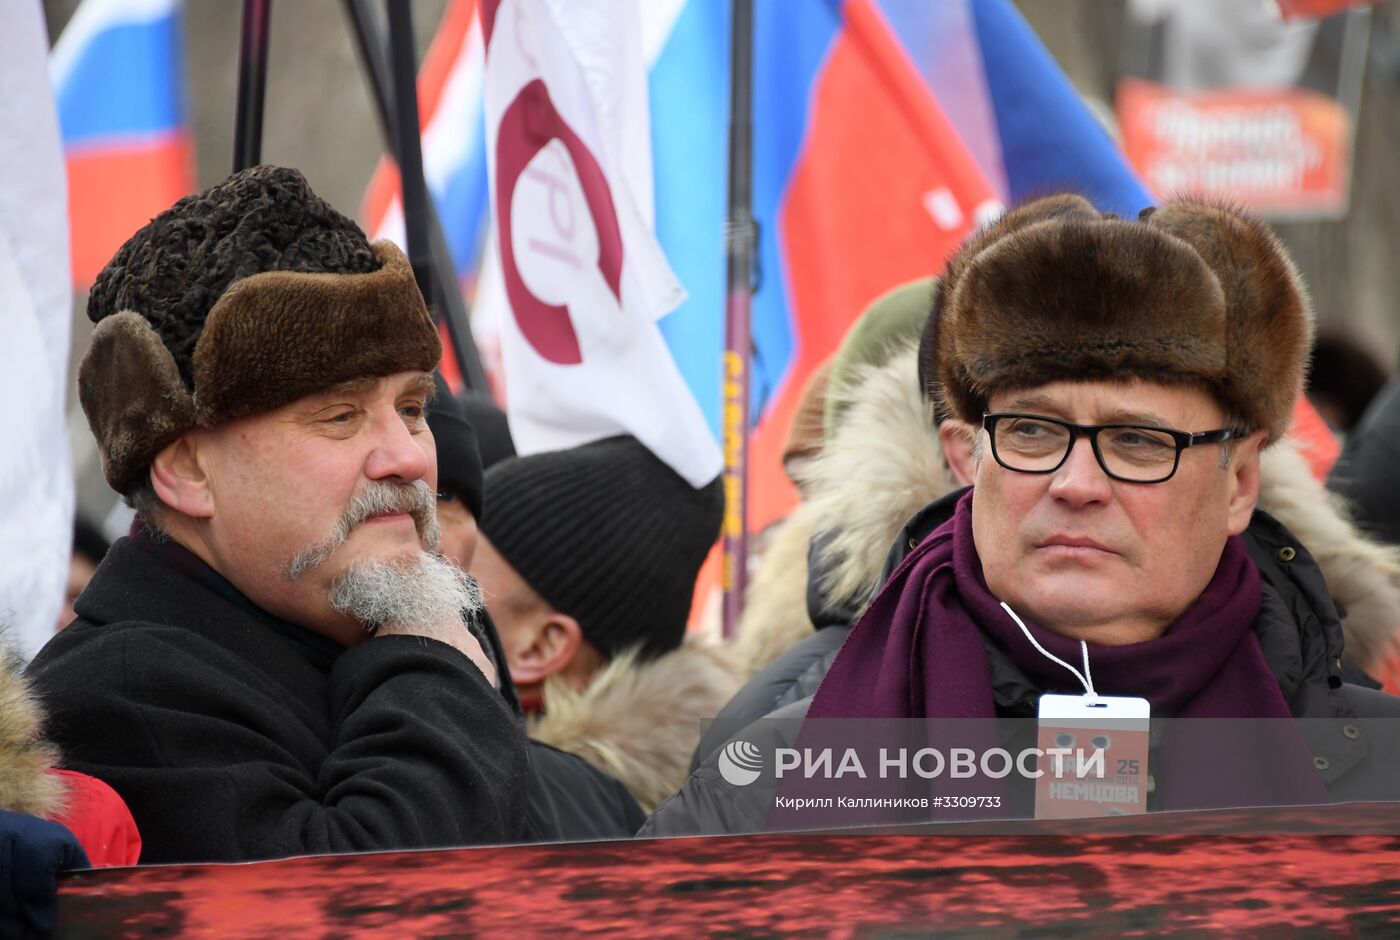 Марш памяти Бориса Немцова в Москве